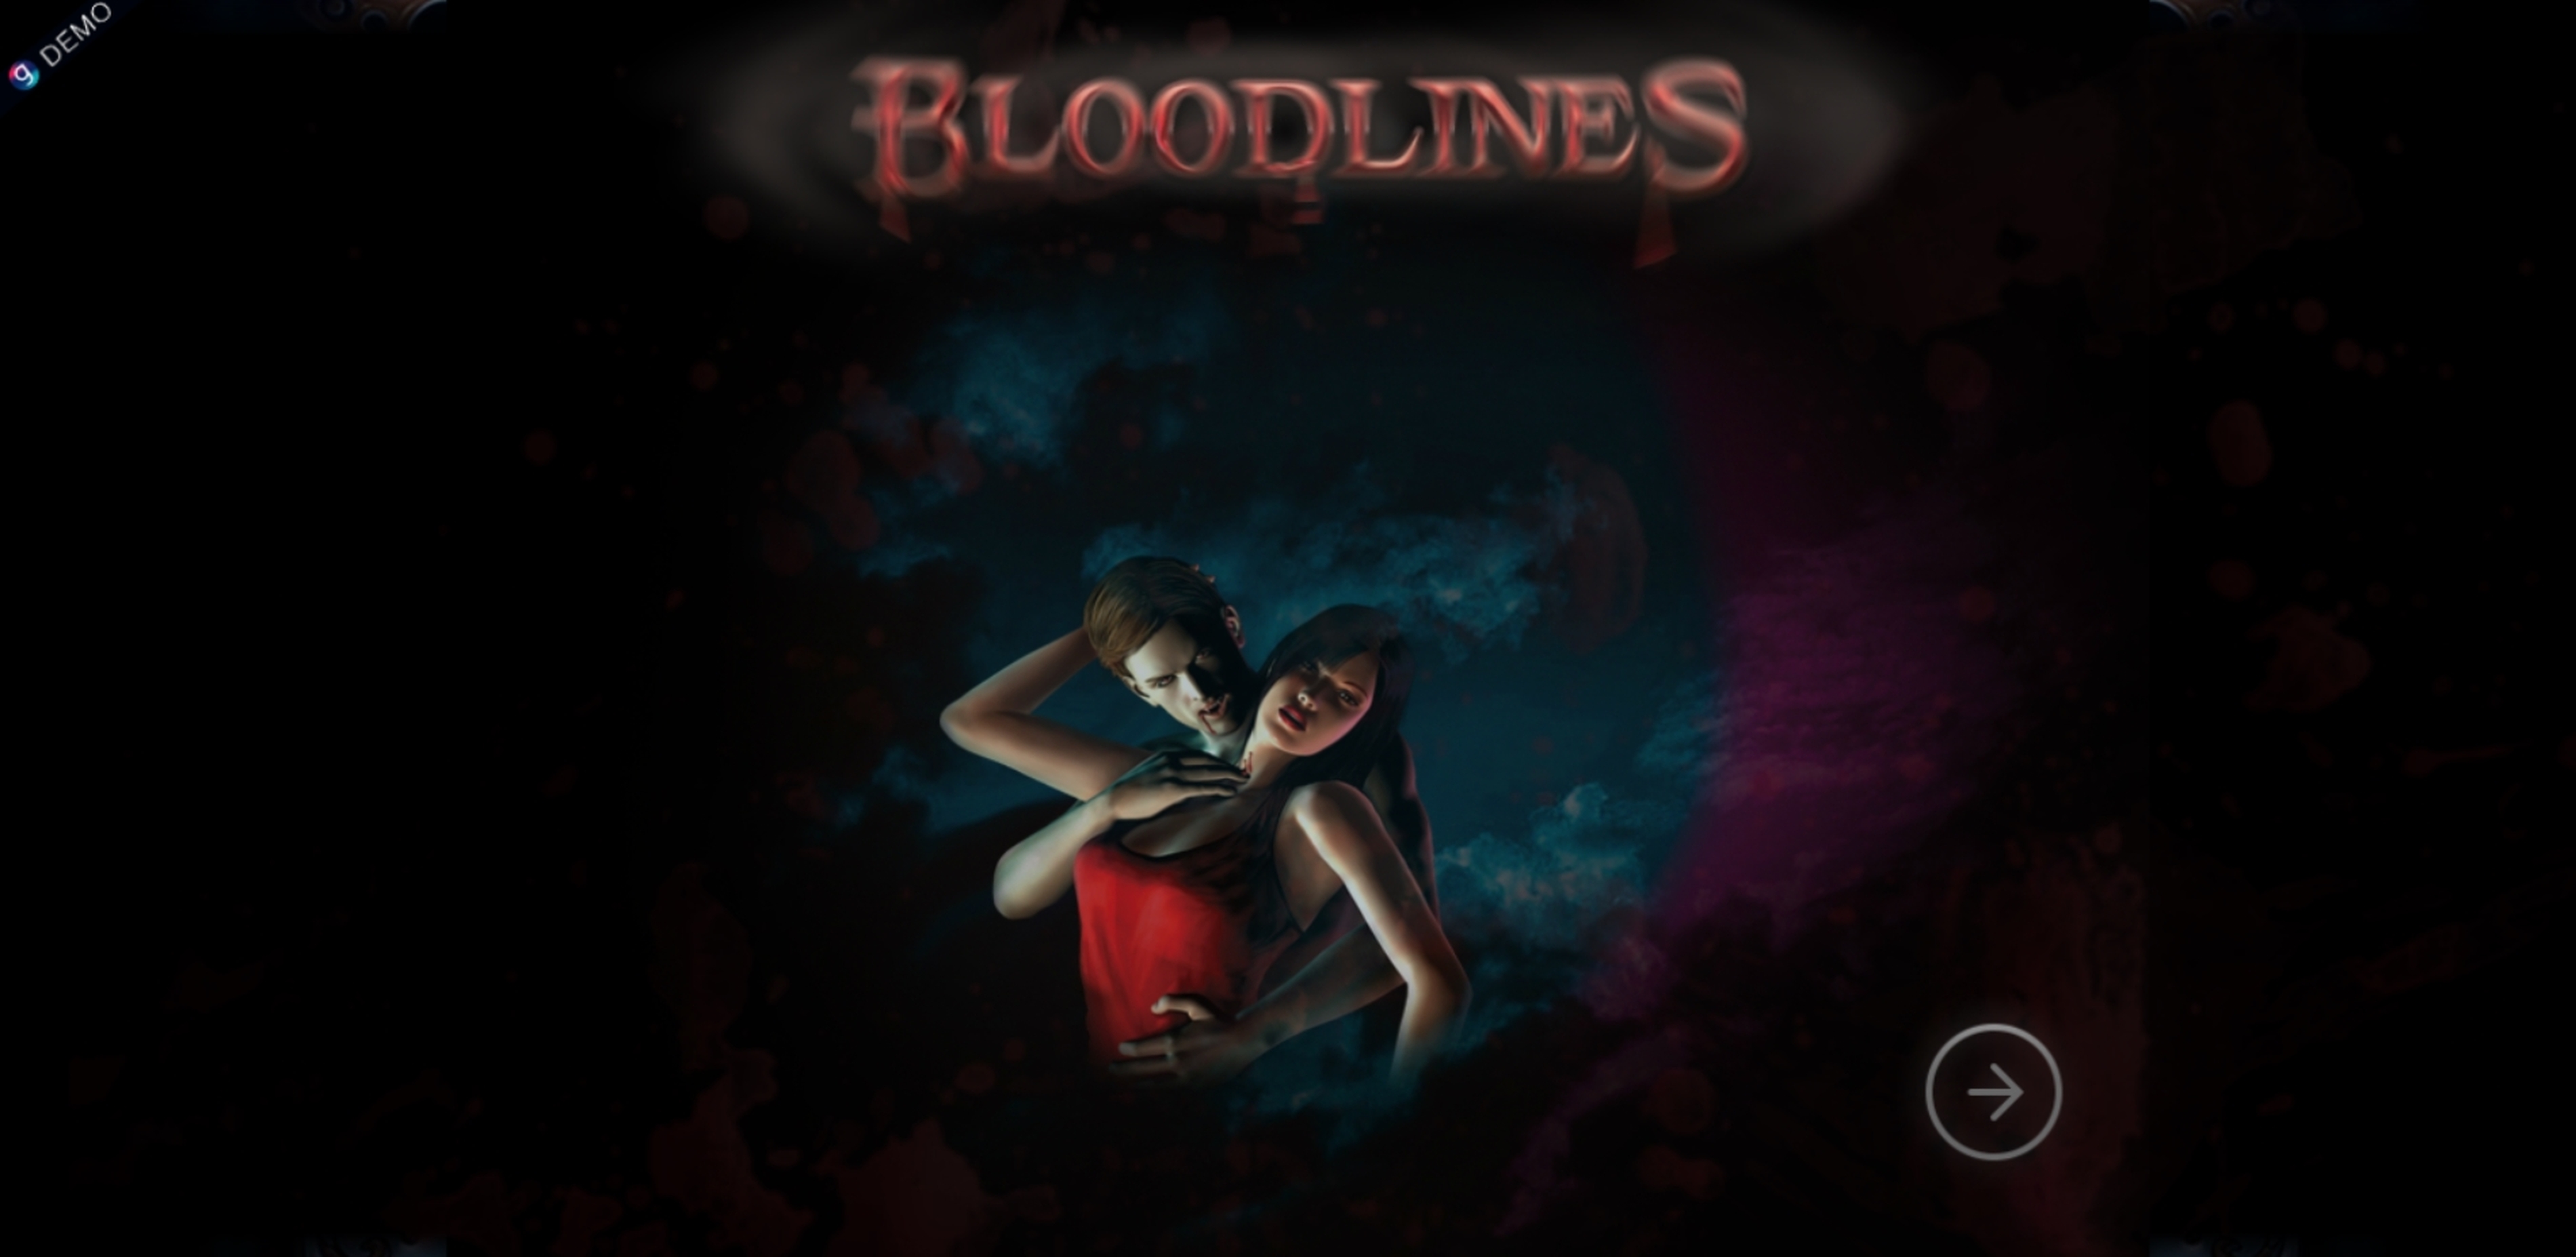 Play Bloodlines Free Casino Slot Game by Genesis Gaming